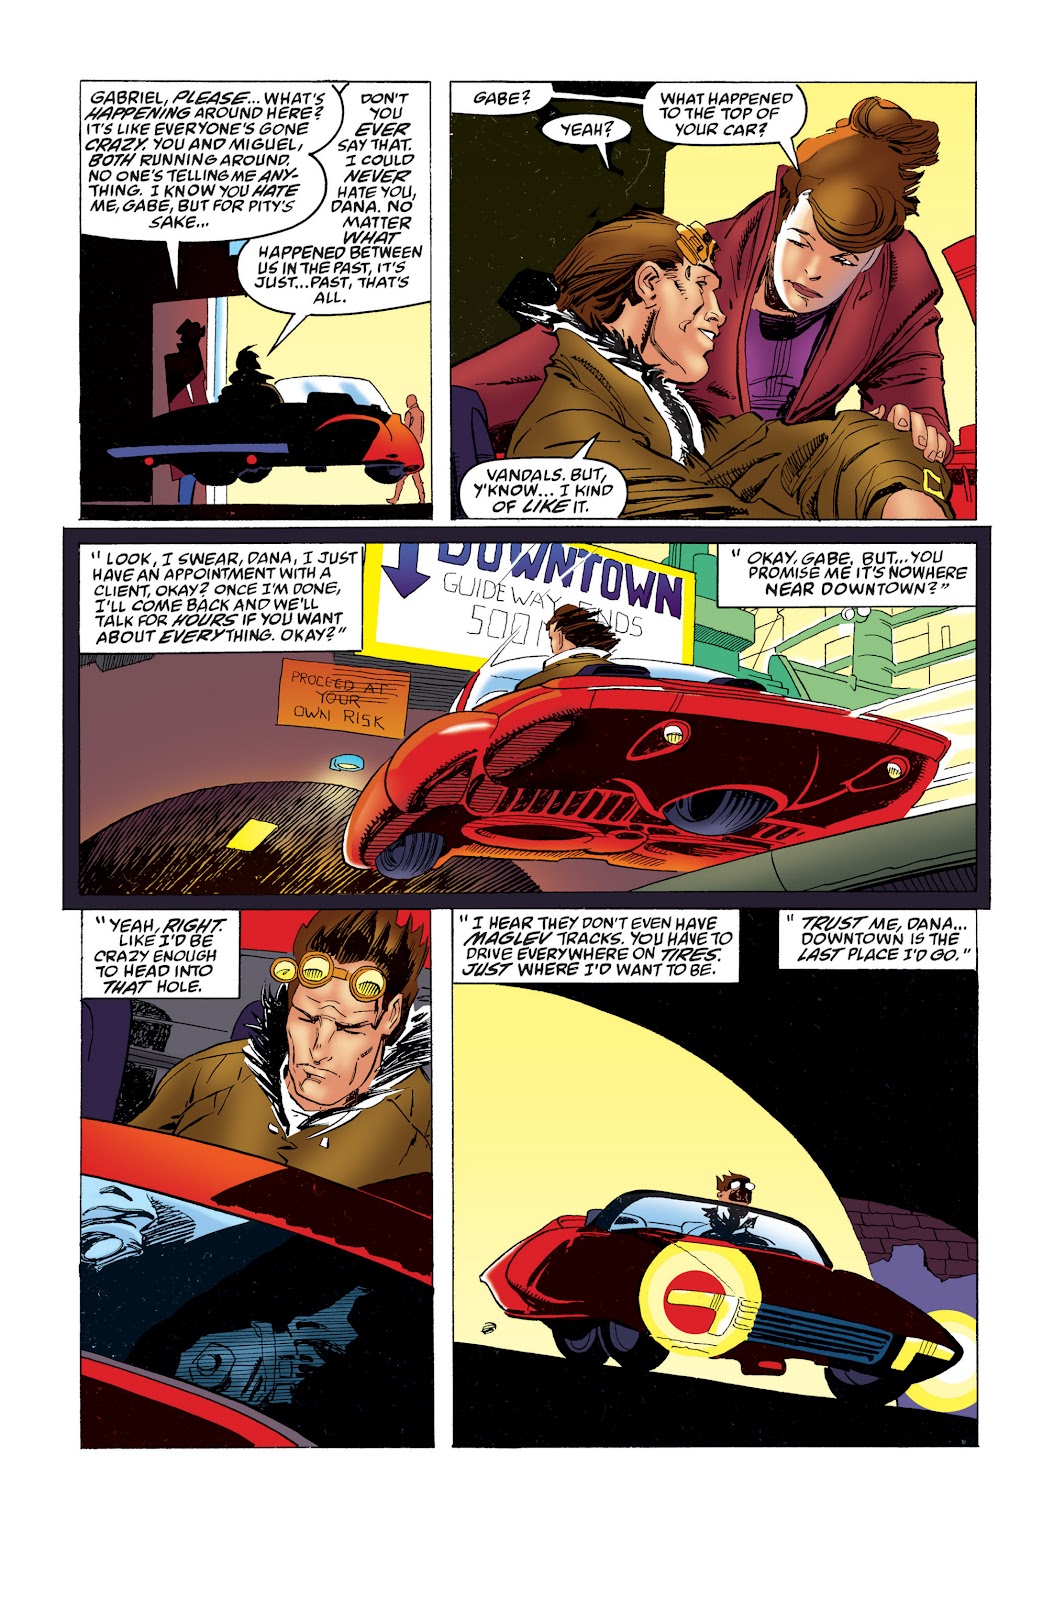 Spider-Man 2099 (1992) issue 6 - Page 16